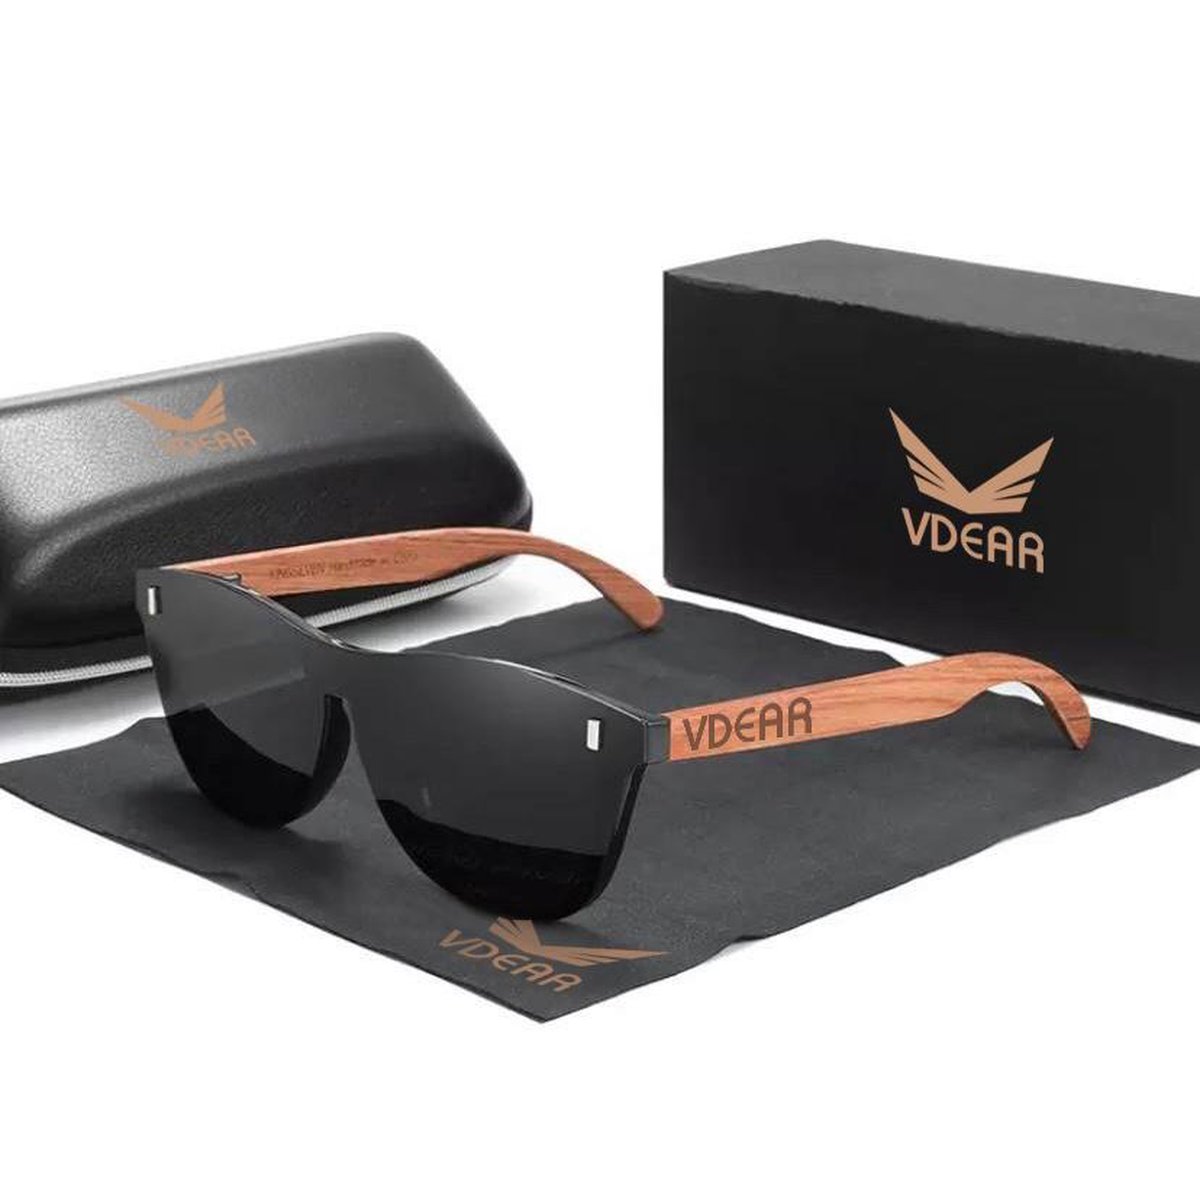 Kingseven - Vdear Black Oculos Sunglasses - Unisex Zonnebril - UV400 en Polarisatie Filter - Bamboe